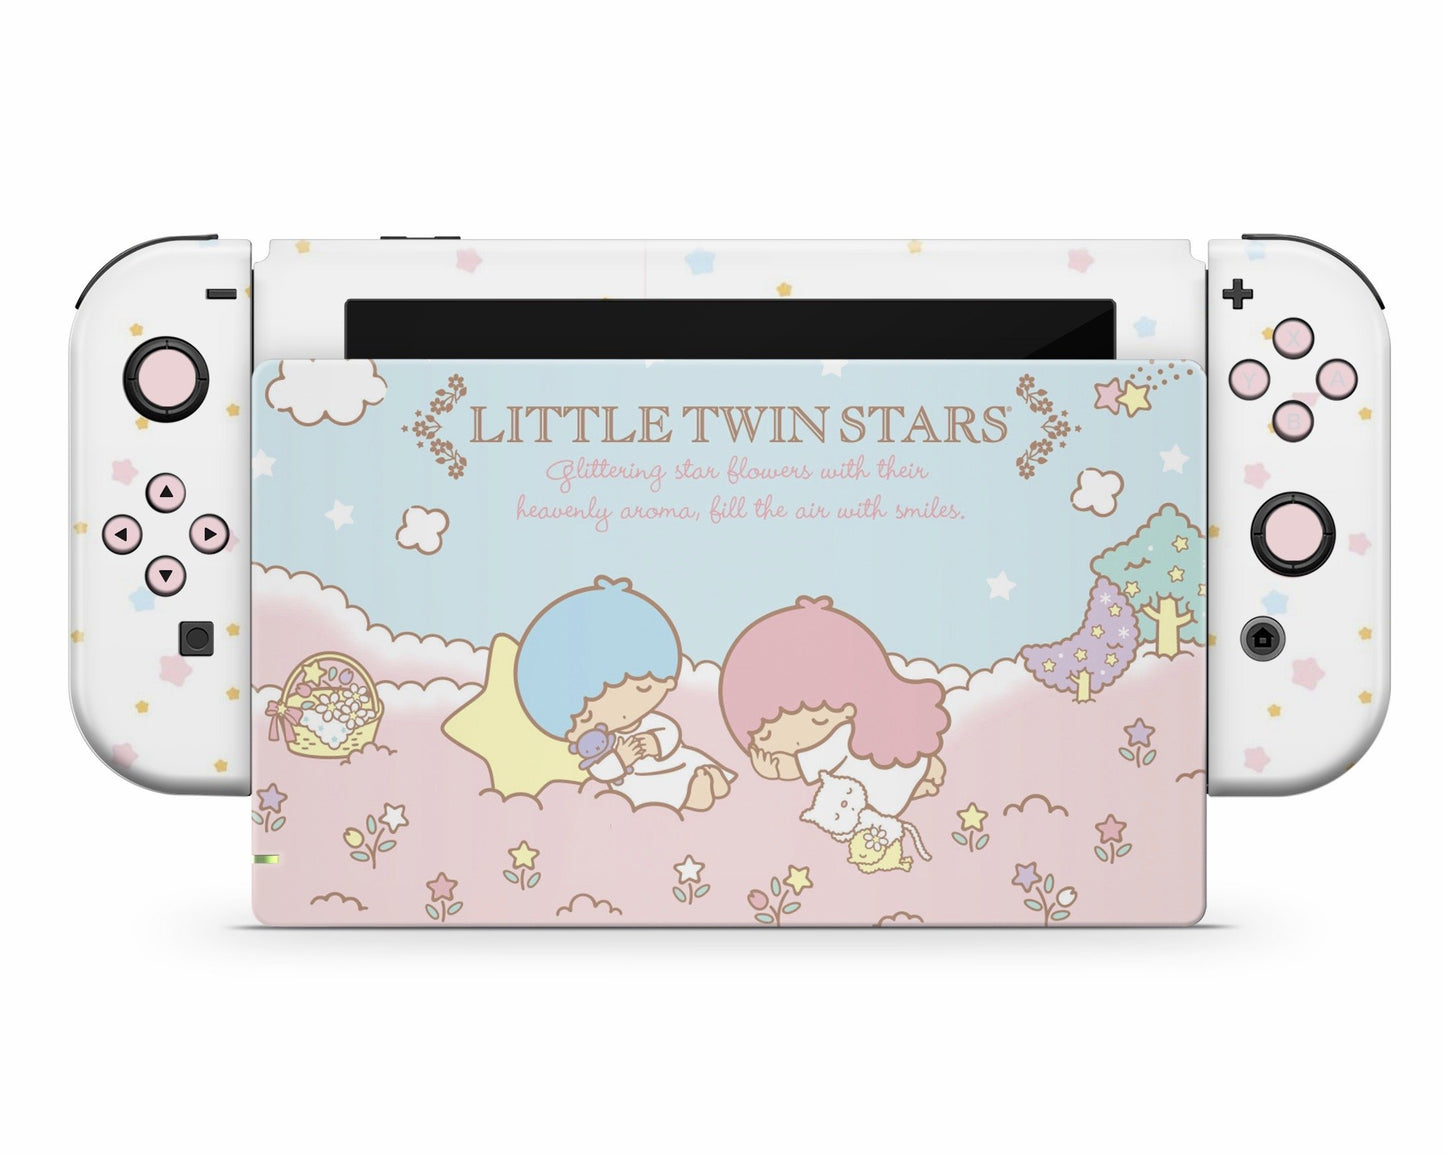 Lux Skins Nintendo Switch My Little Twin Star Dreamy White Full Set Skins - Pop culture My Little Twin Star Skin